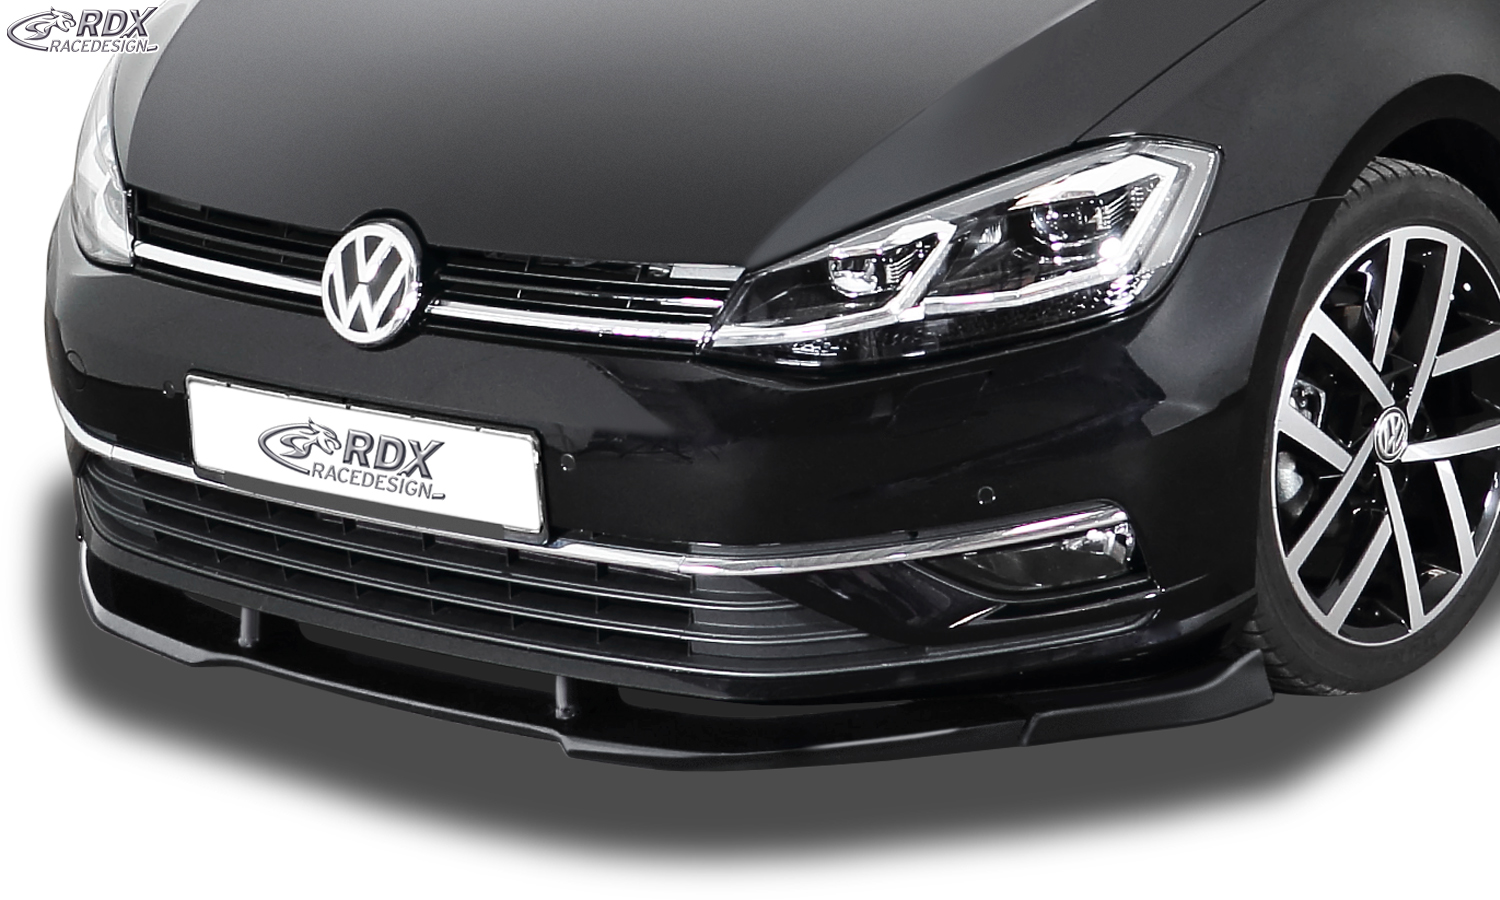 RDFAVX30802 - RDX Frontspoiler VARIO-X für VW Golf 7 Facelift 2017+  Frontlippe Front Ansatz Vorne Spoilerlippe